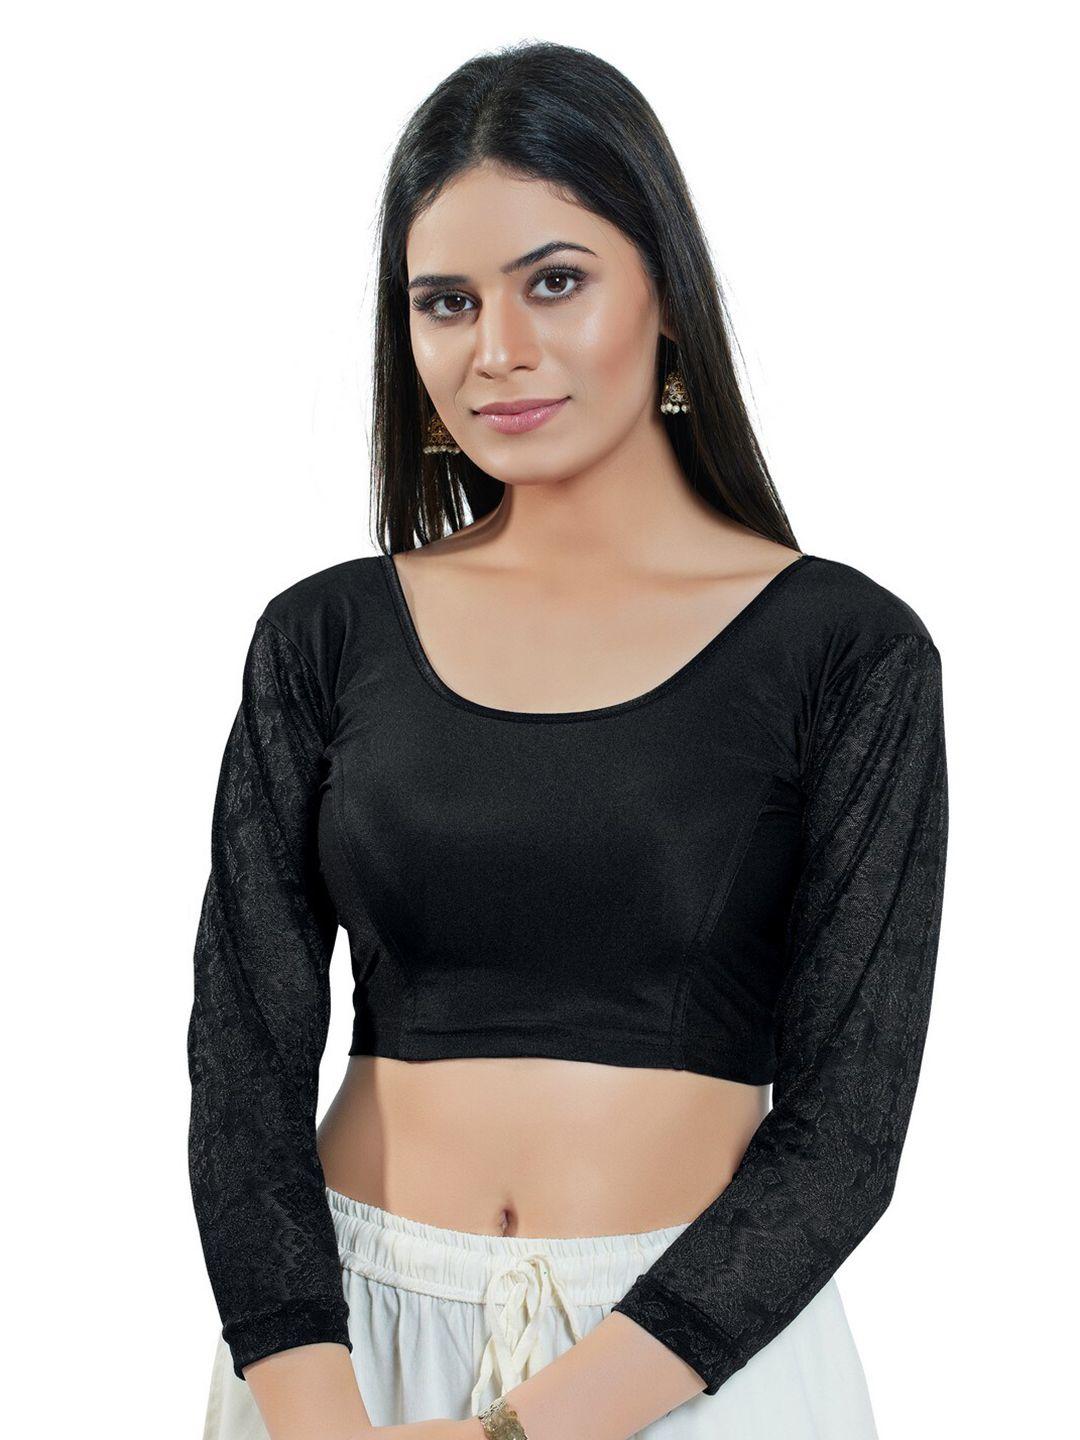 salwar studio stretchable cotton saree blouse